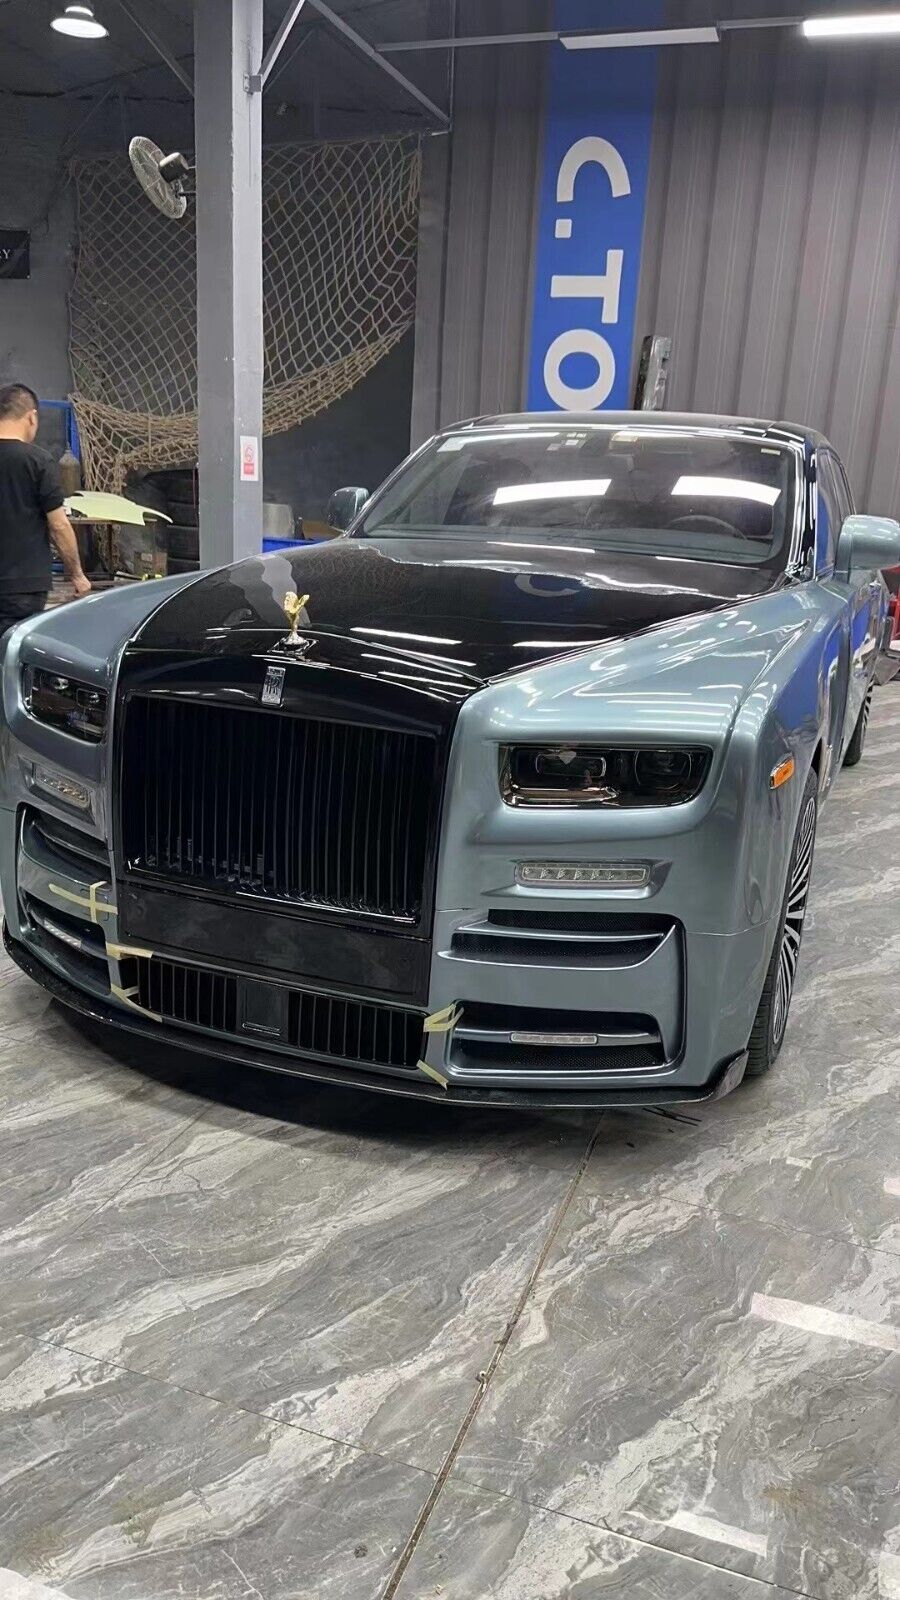 RSP MS CarbonFiber bodyKit Lip Side Diffuser Grill light fit Rolls Royce Phantom